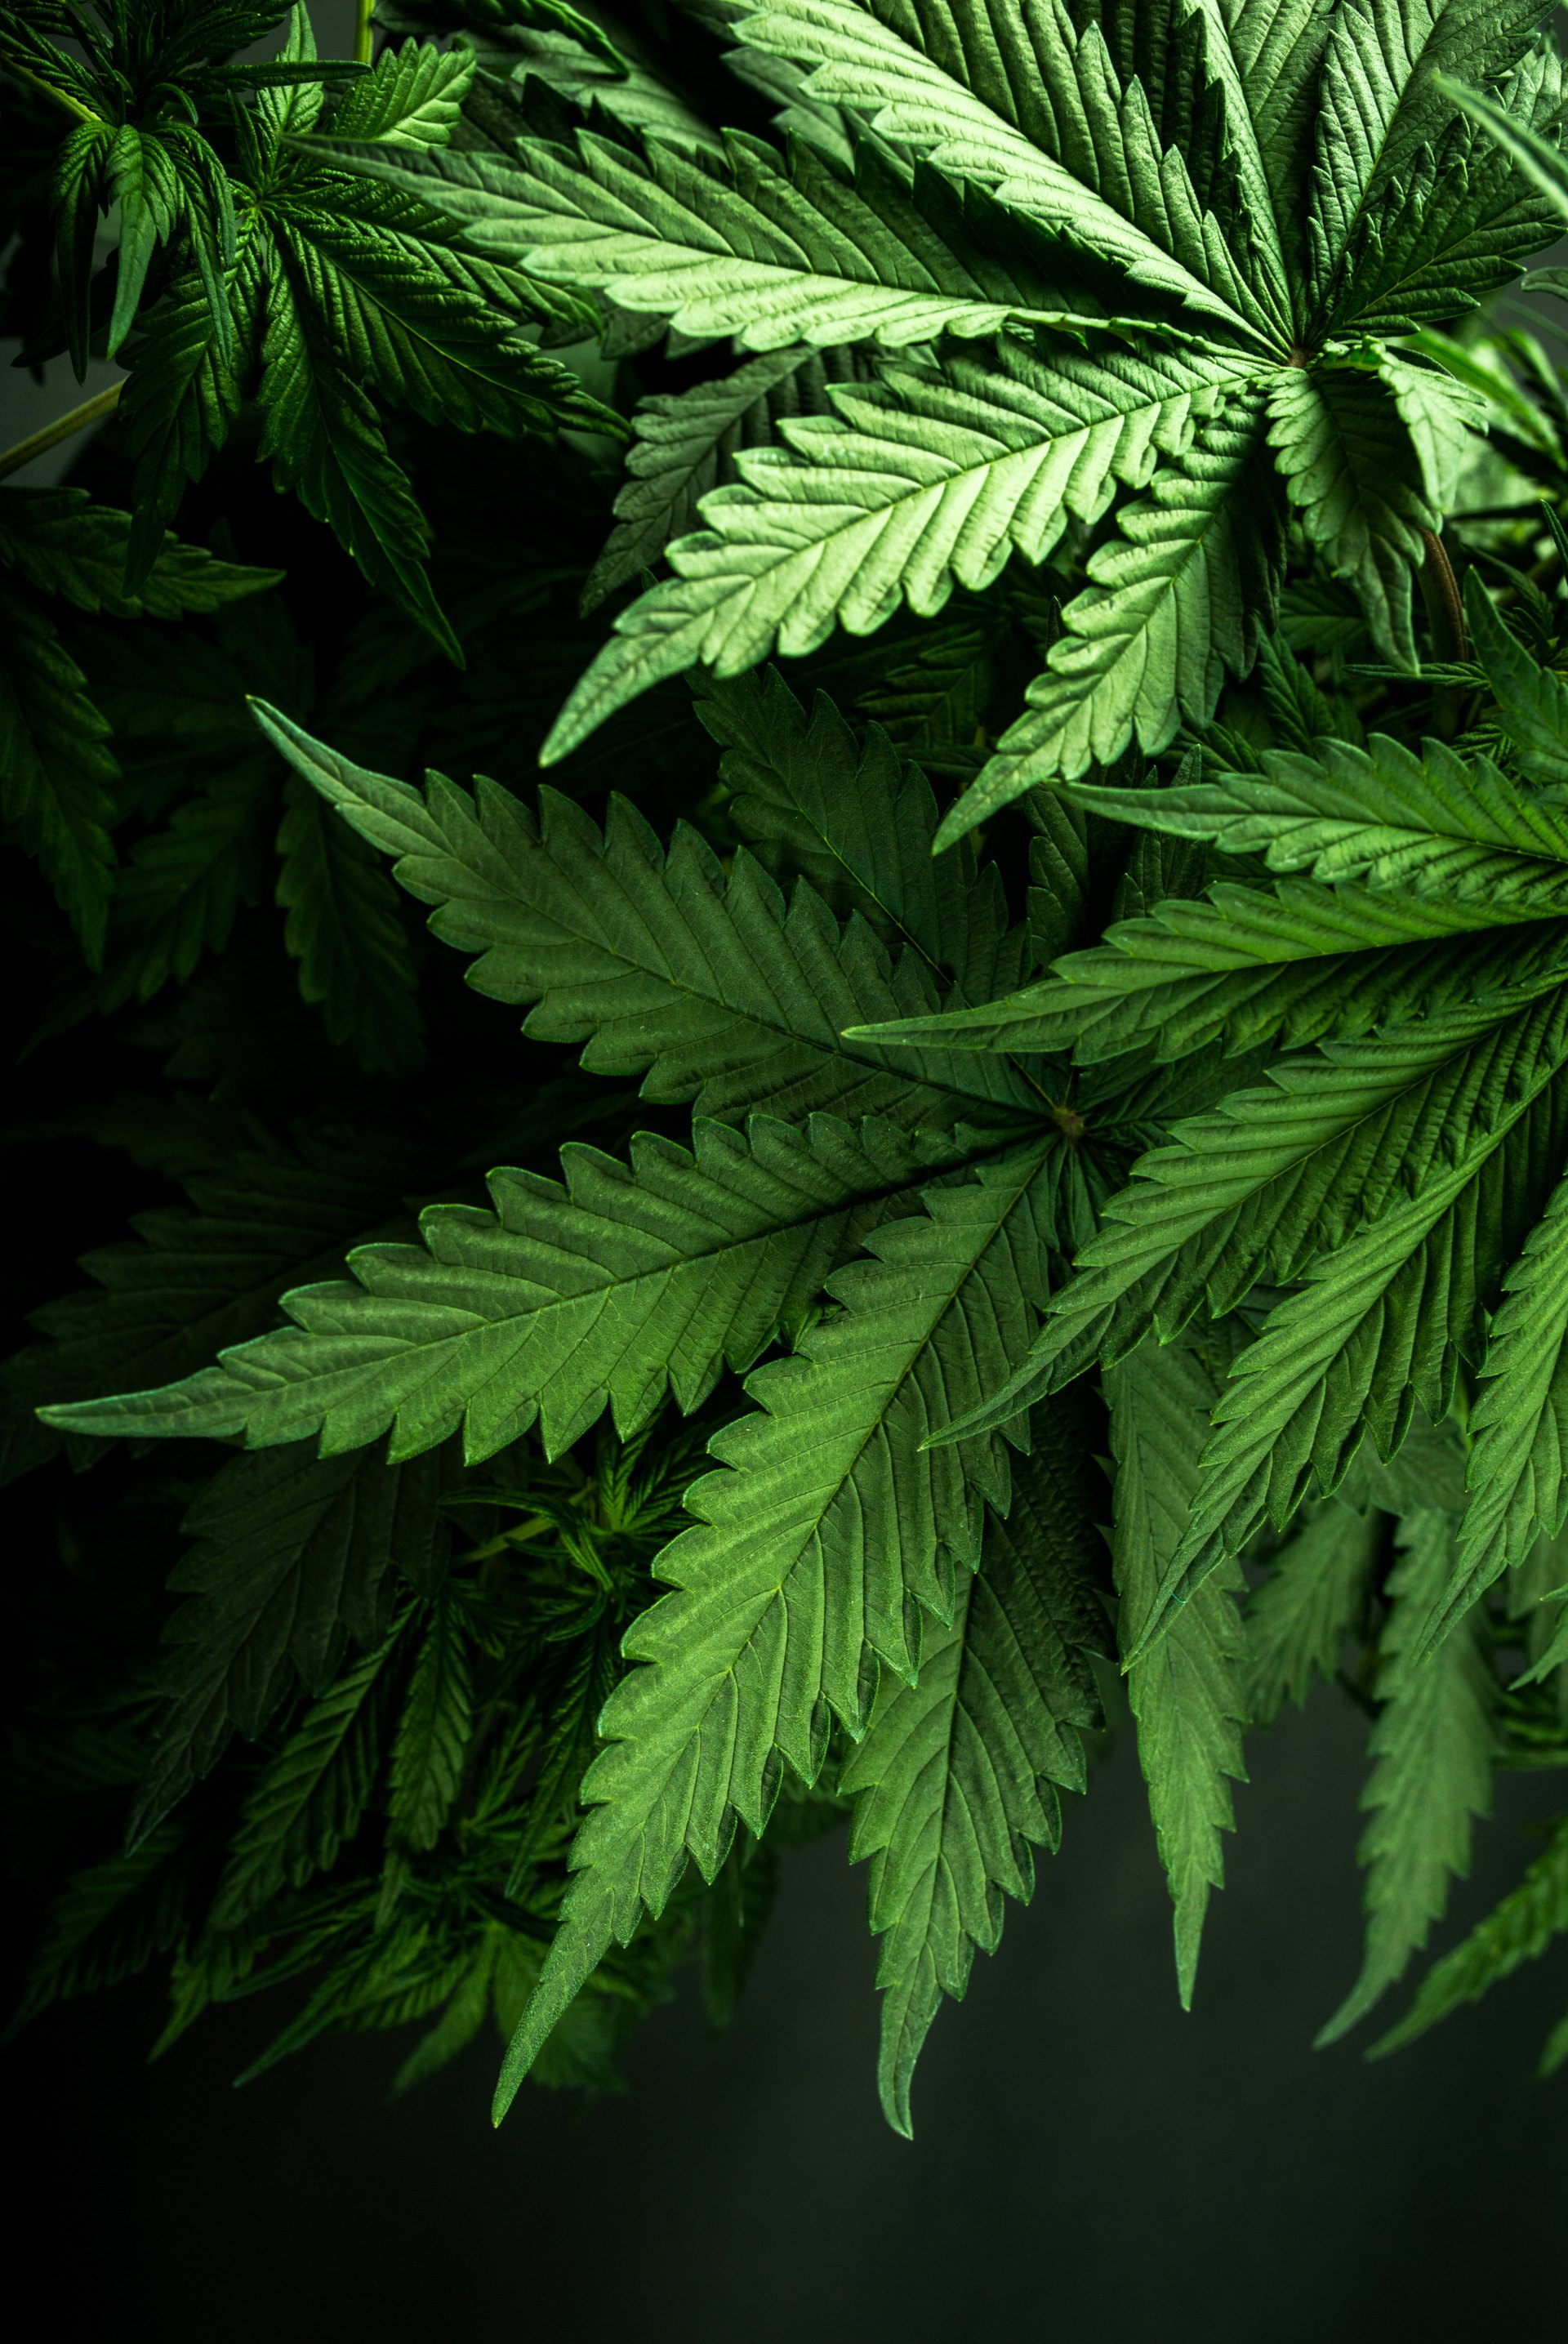 Cannabis leaves on dark background.